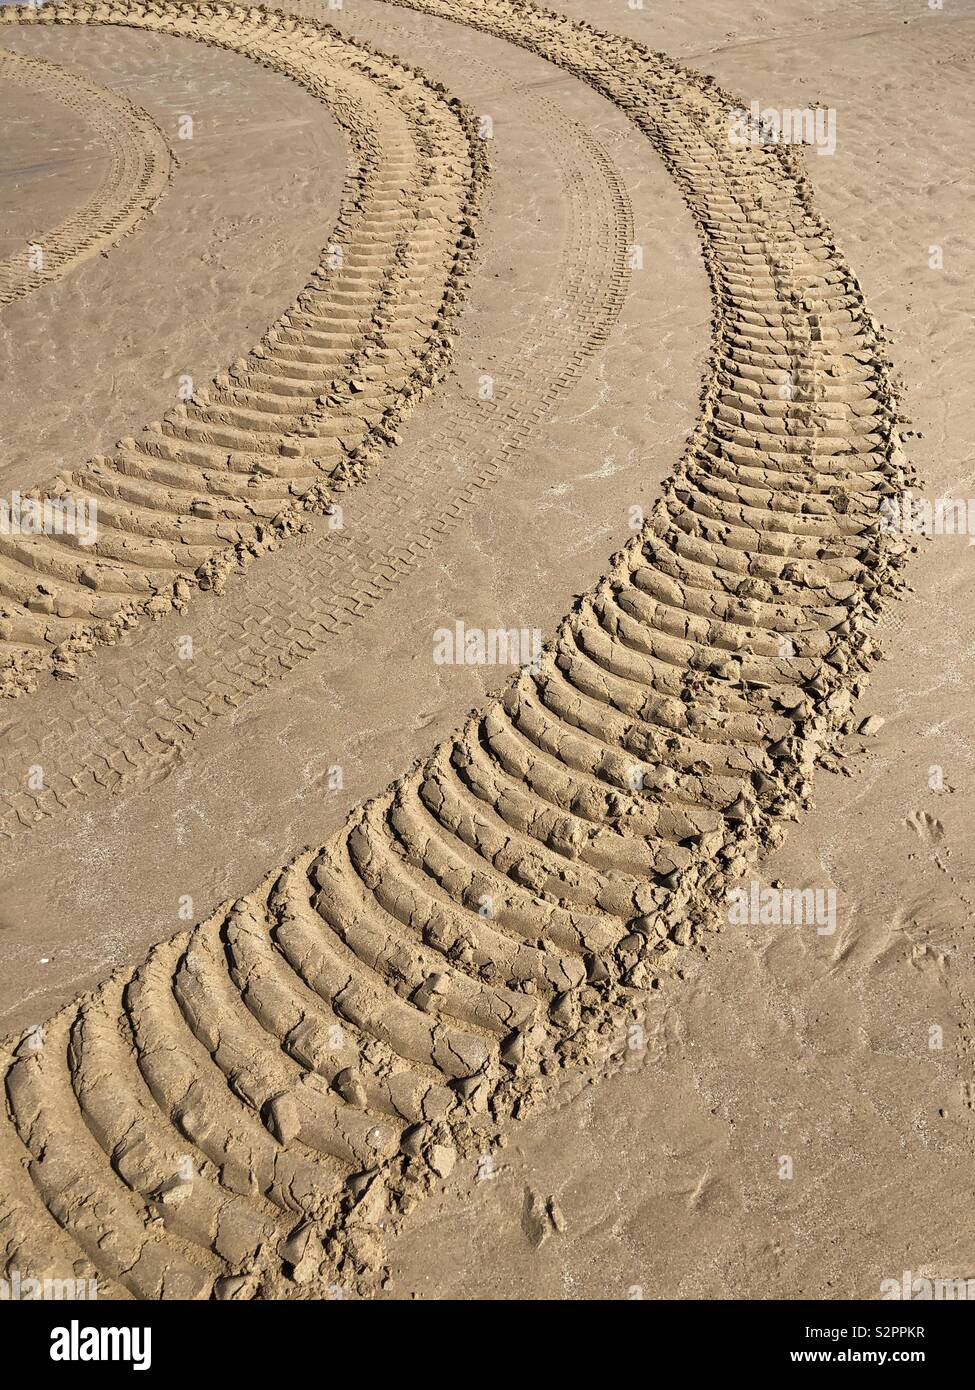 Wide caterpillar tracks on a sandy beach Stock Photo